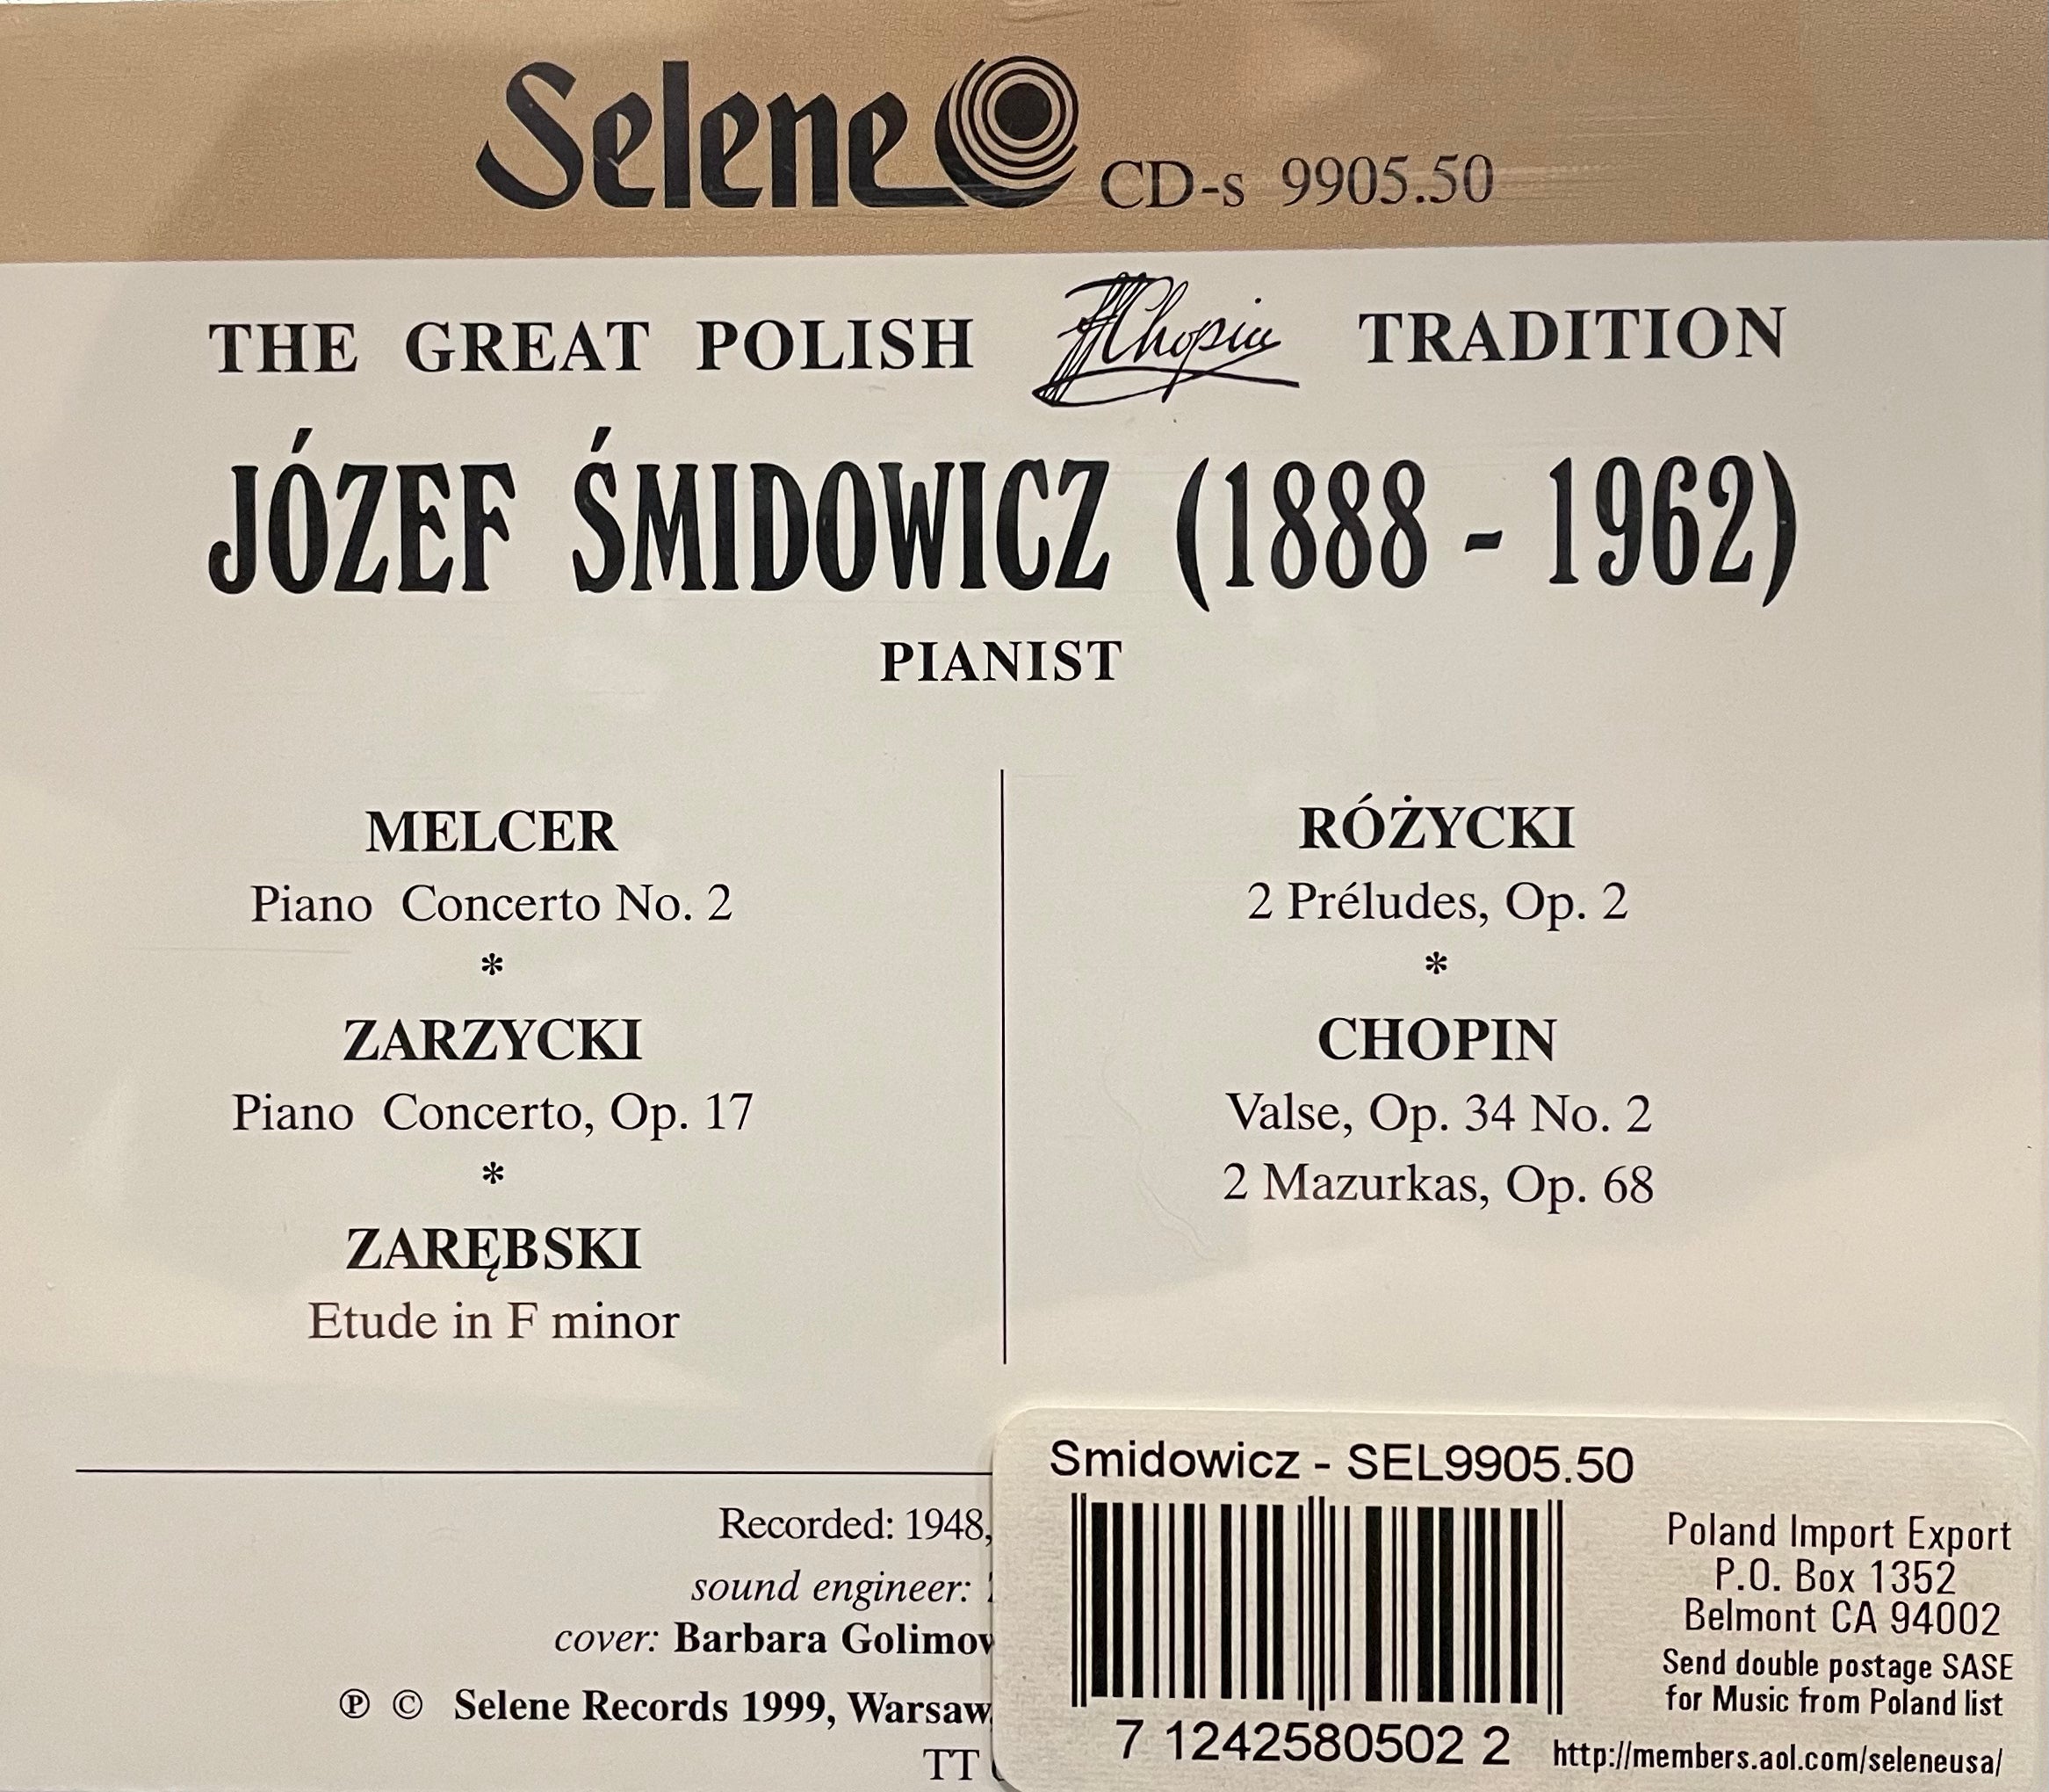 The Great Polish Chopin Tradition - Smidowicz Vol. 5